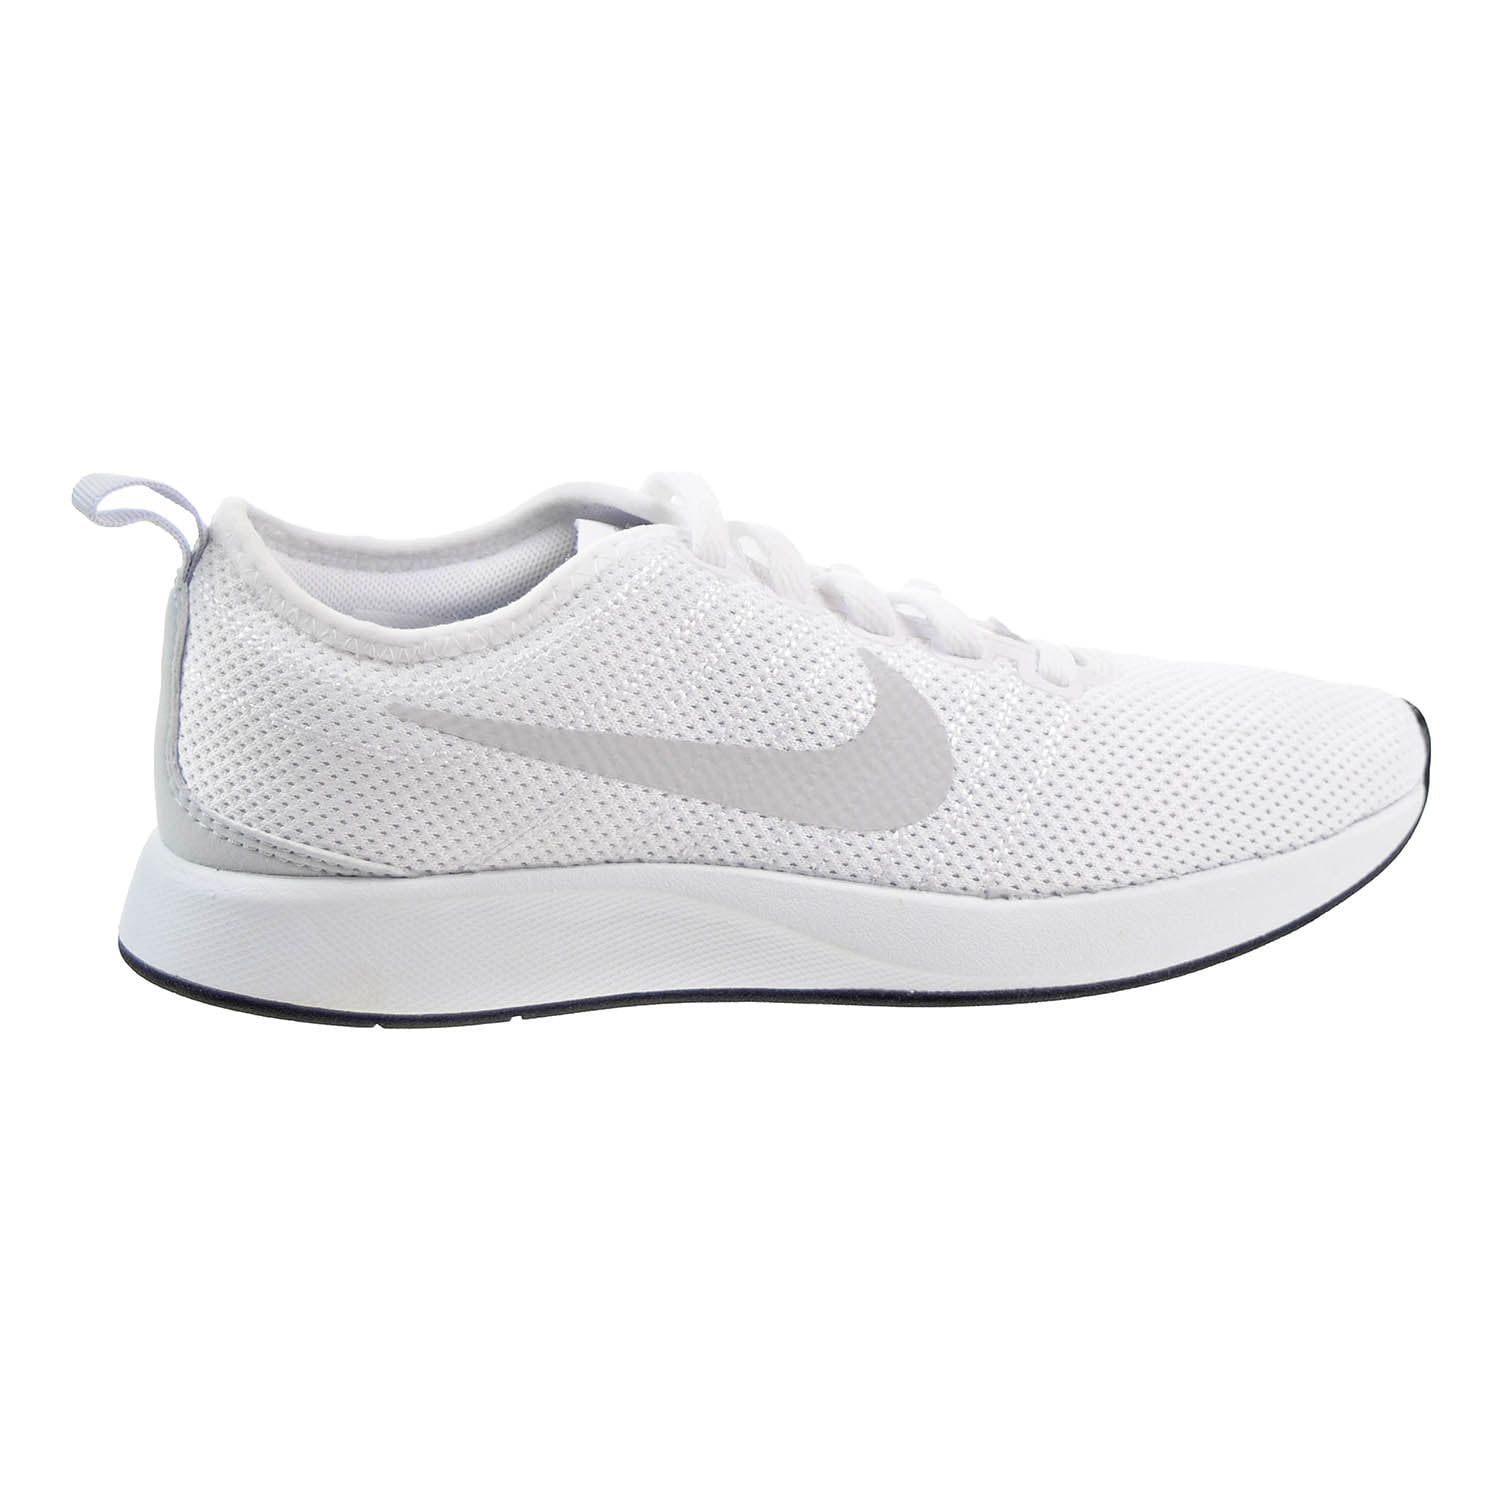 bandera Sui Monarquía Nike Dual Tone Racer Womens Shoes White/White/Pure platinum 917682-101 -  Walmart.com